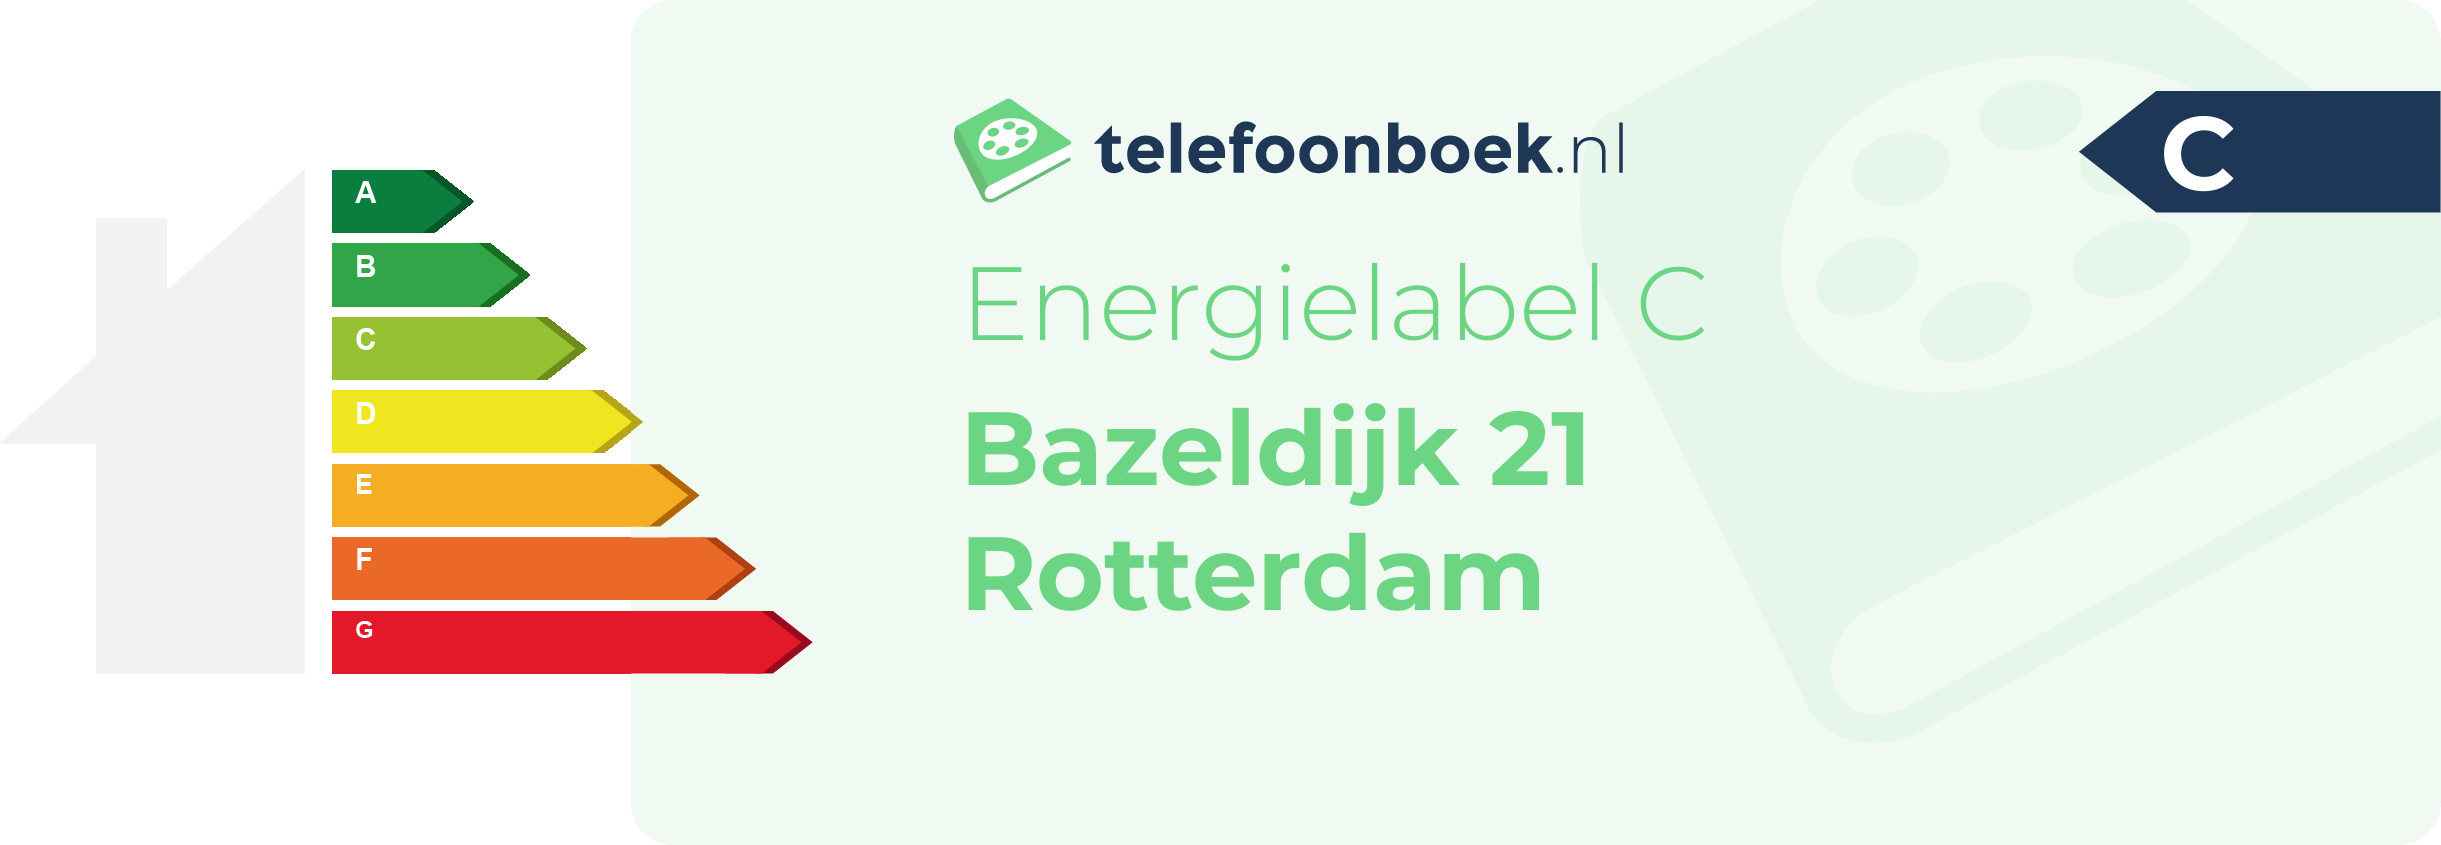 Energielabel Bazeldijk 21 Rotterdam